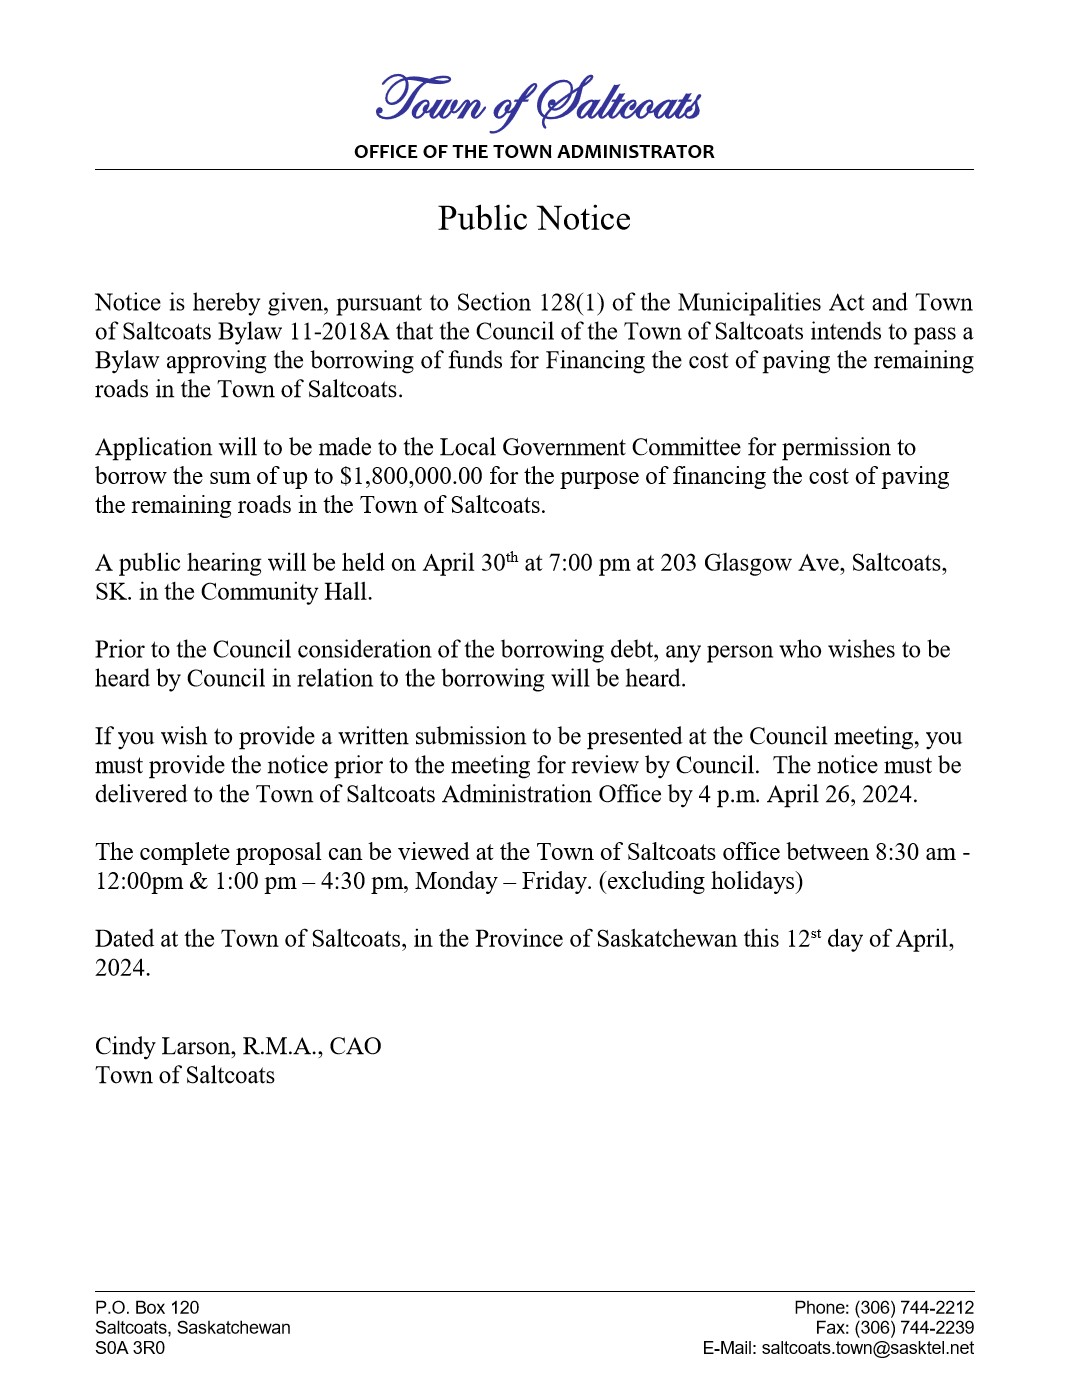 Public Notice - Borrowing of Funds